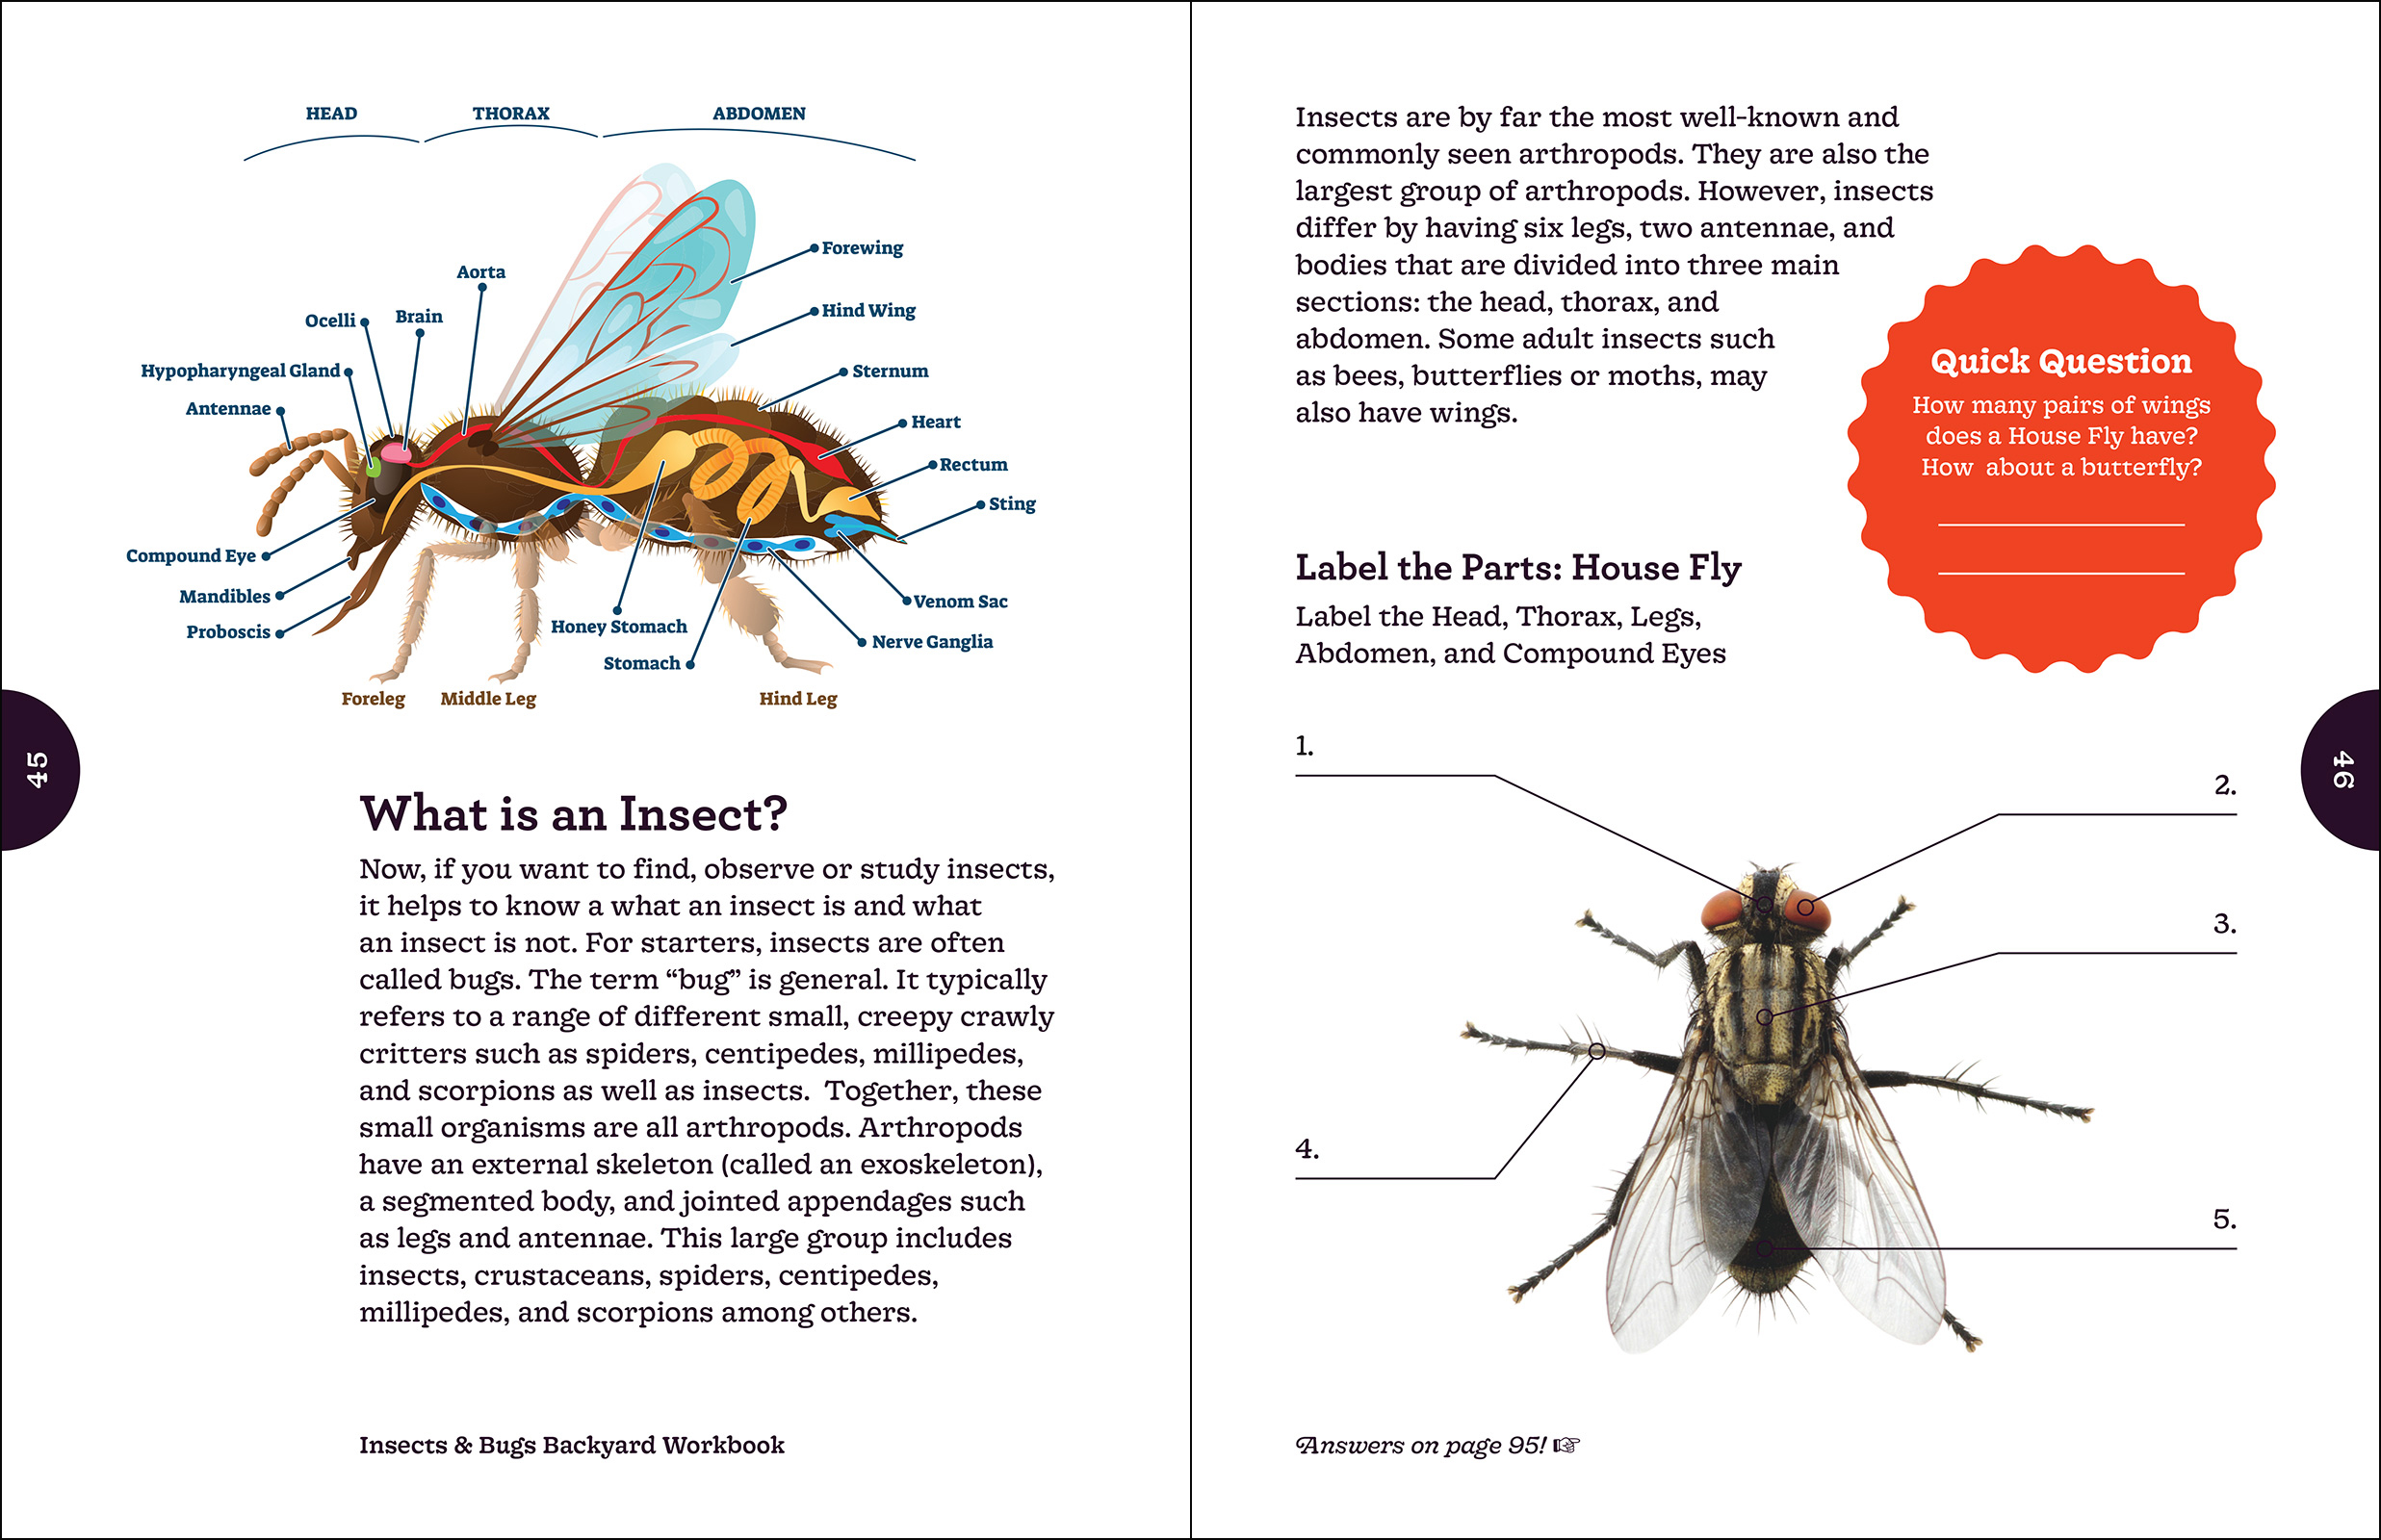 Insects & Bugs Backyard Workbook